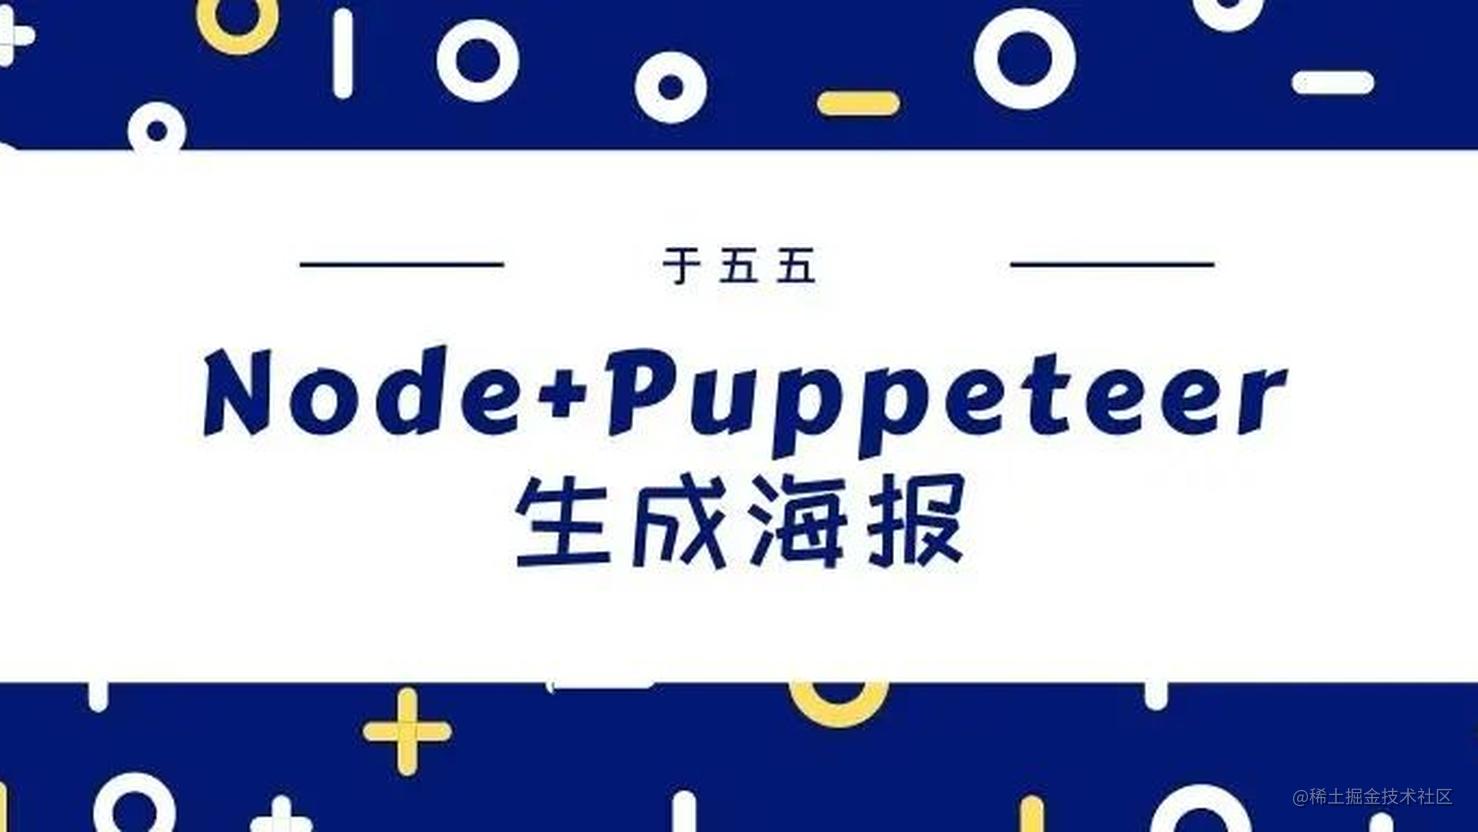 Node+Puppeteer生成海报